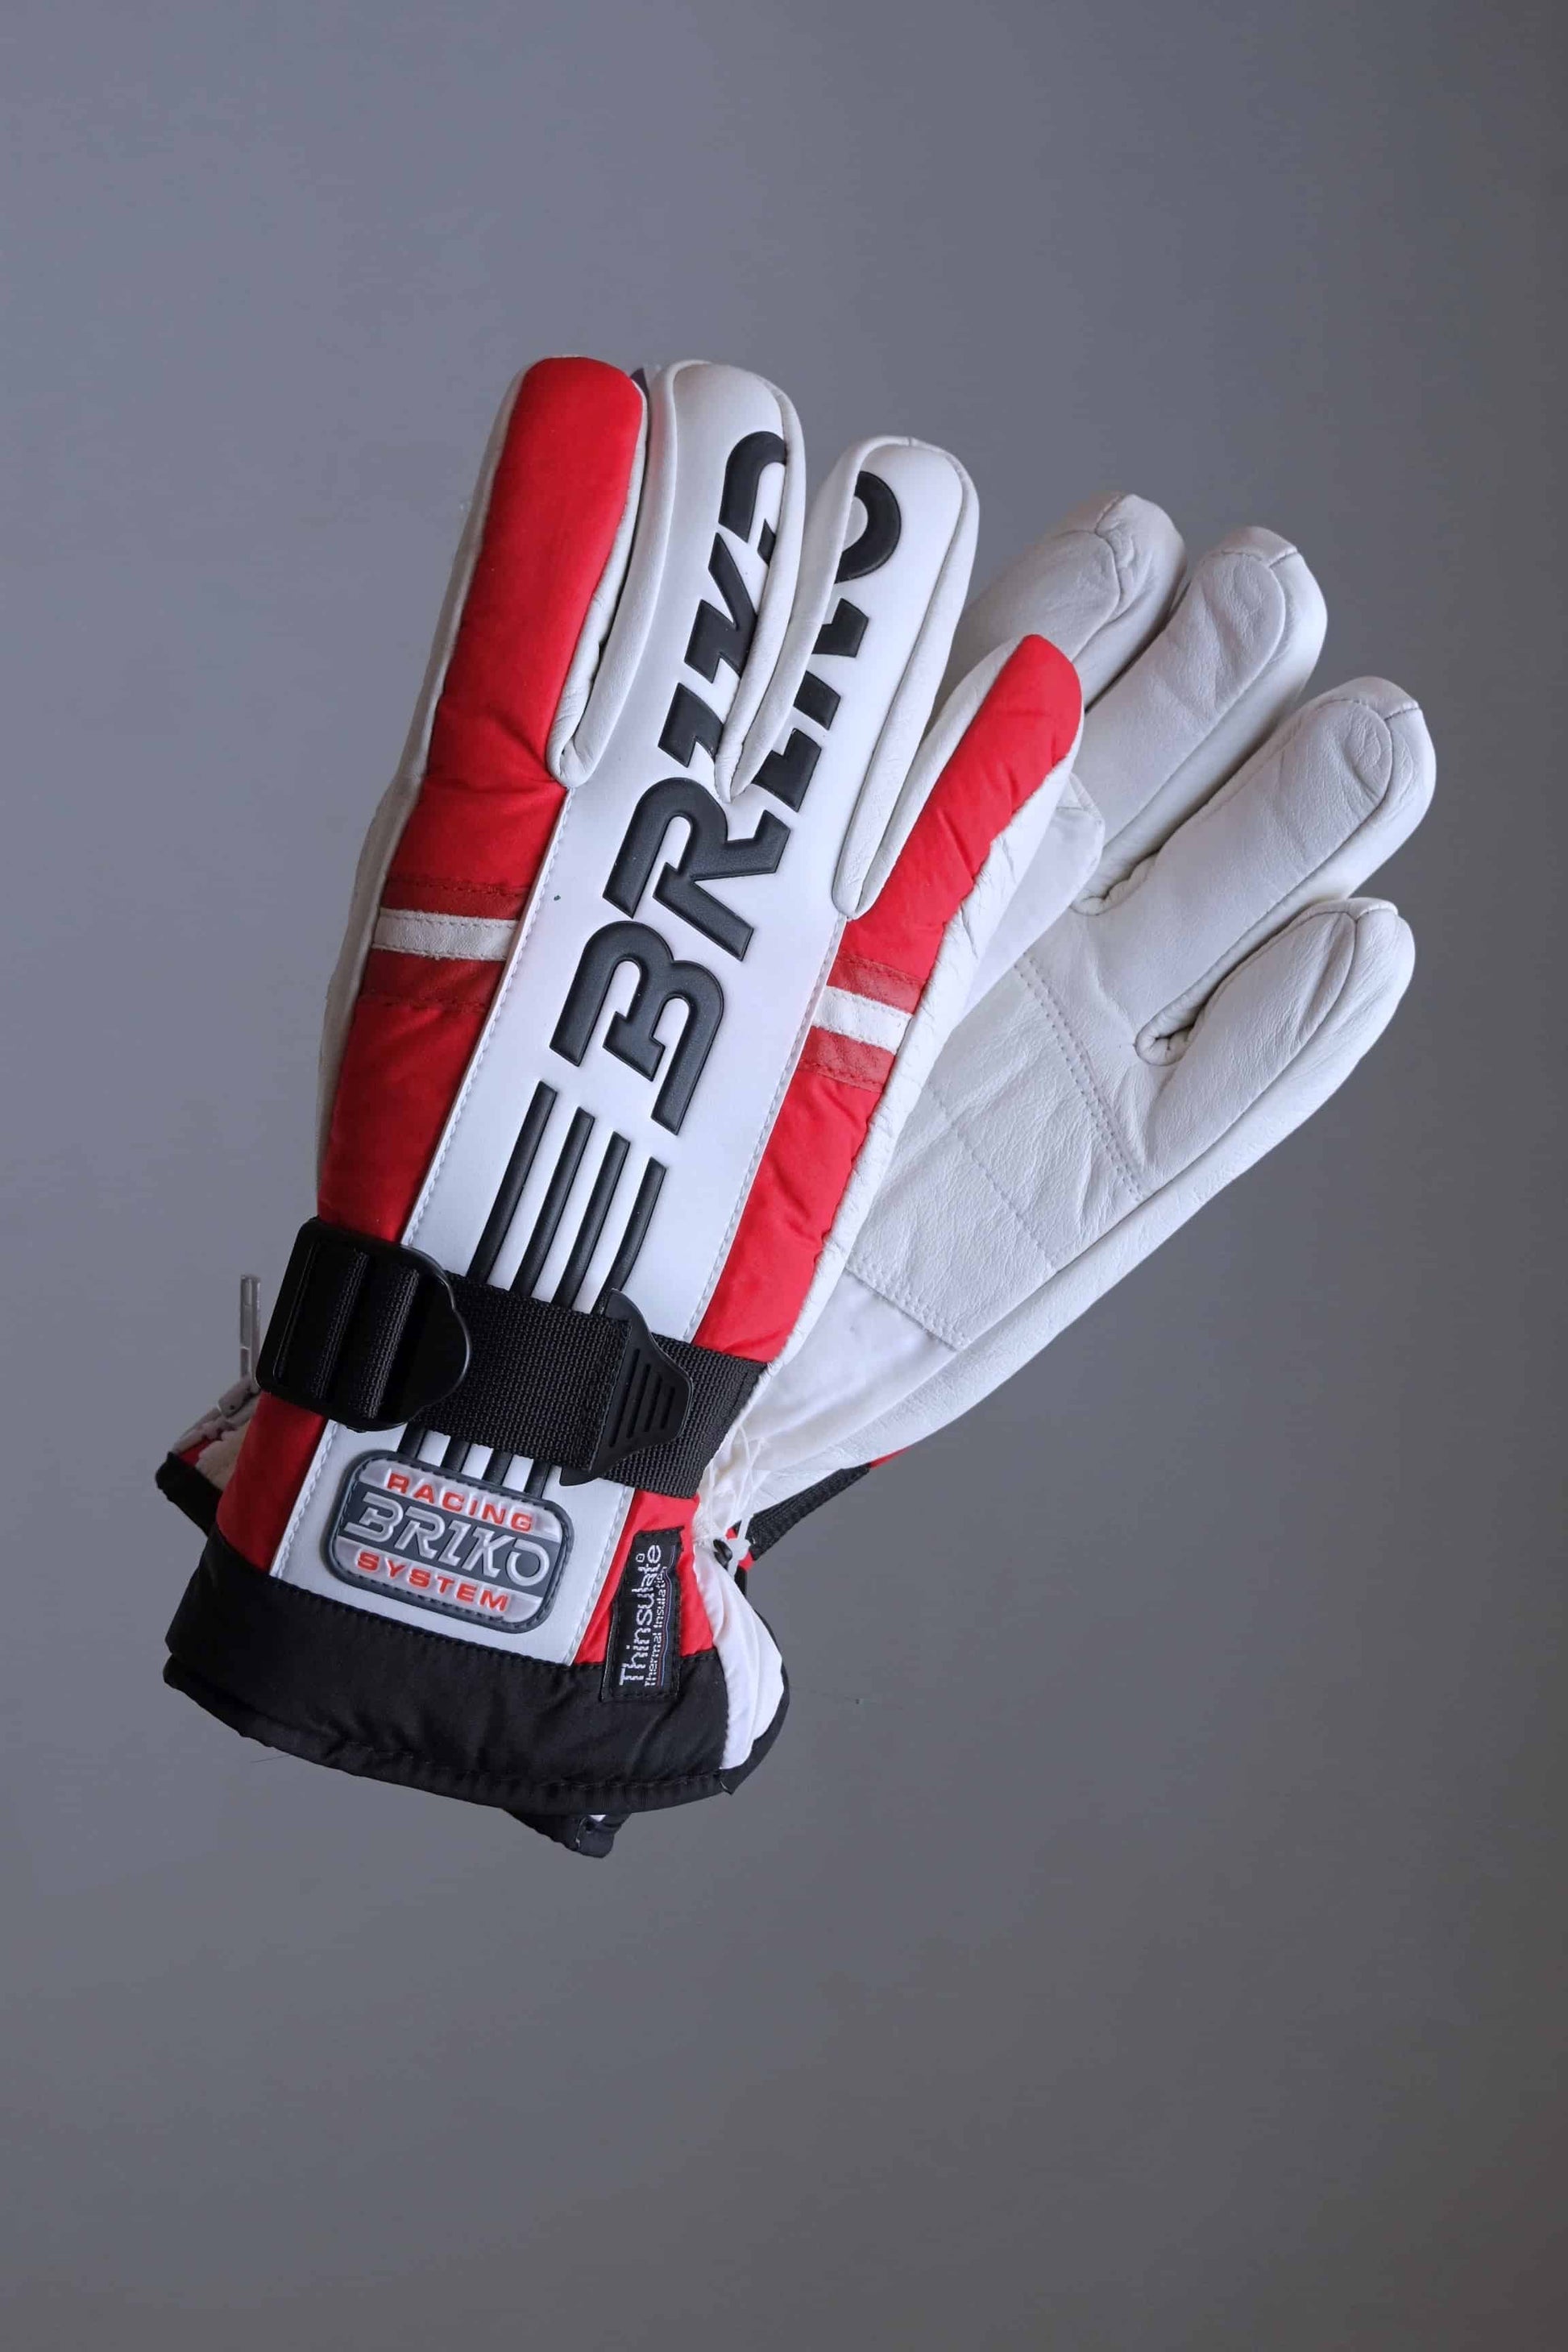 BRIKO Austria World Cup Leather Ski Gloves